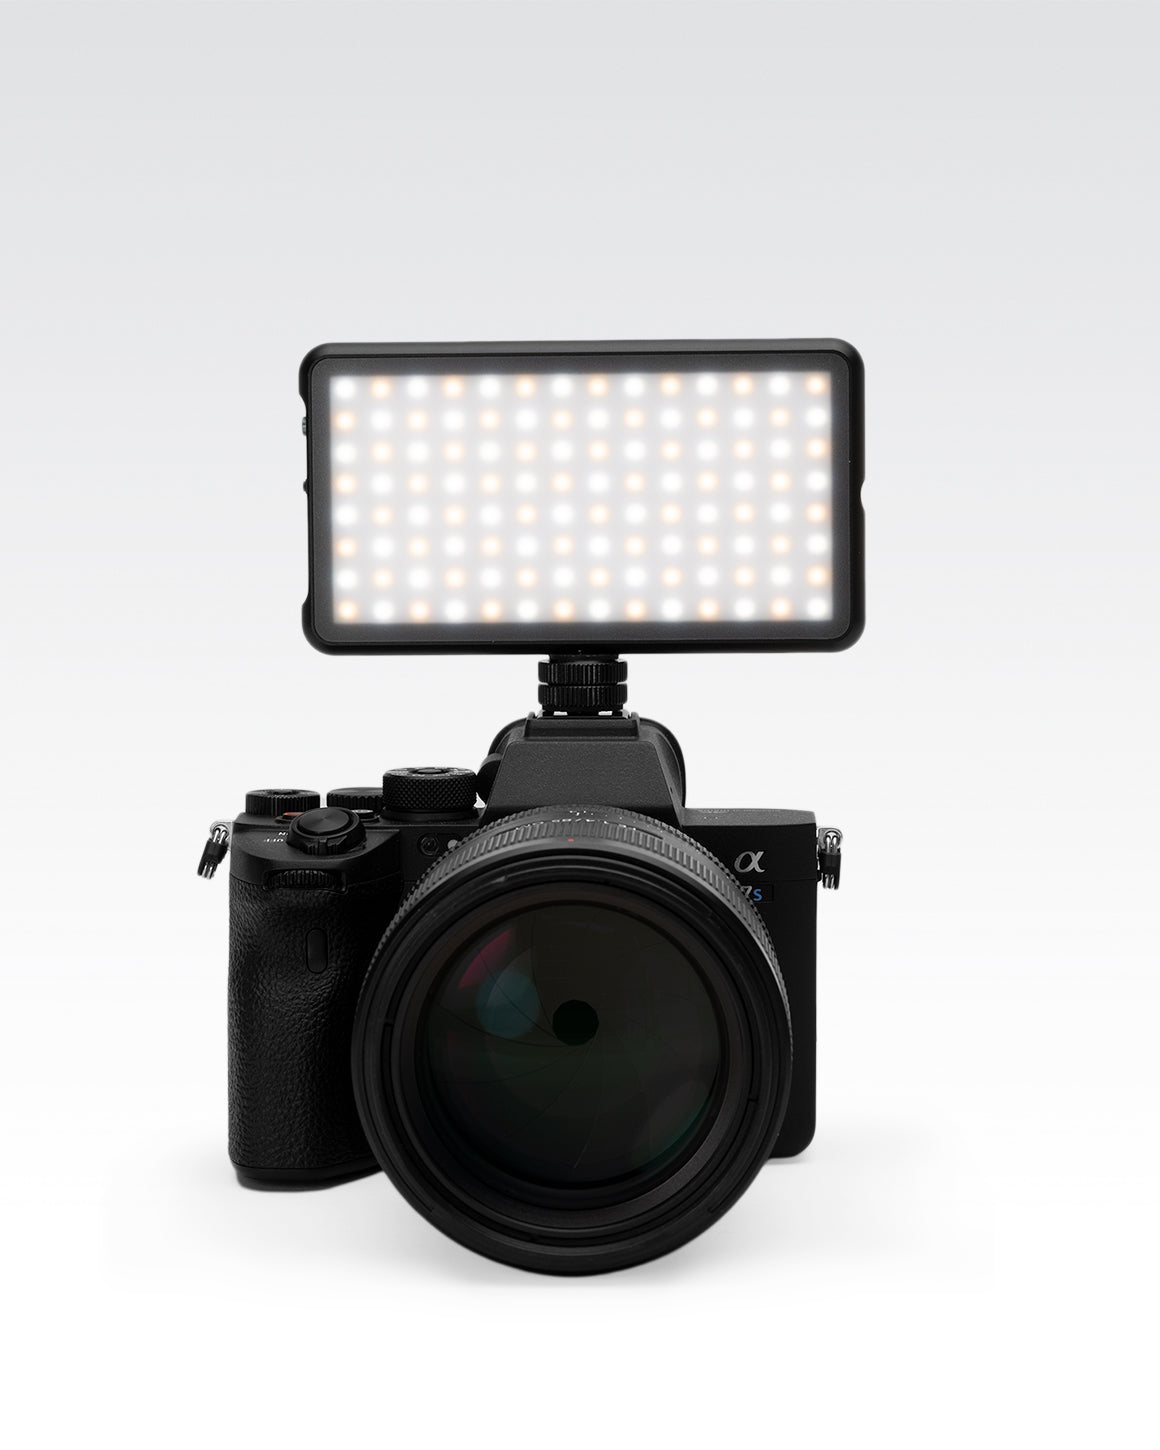 Panel Go Light mounted to DSLR camera